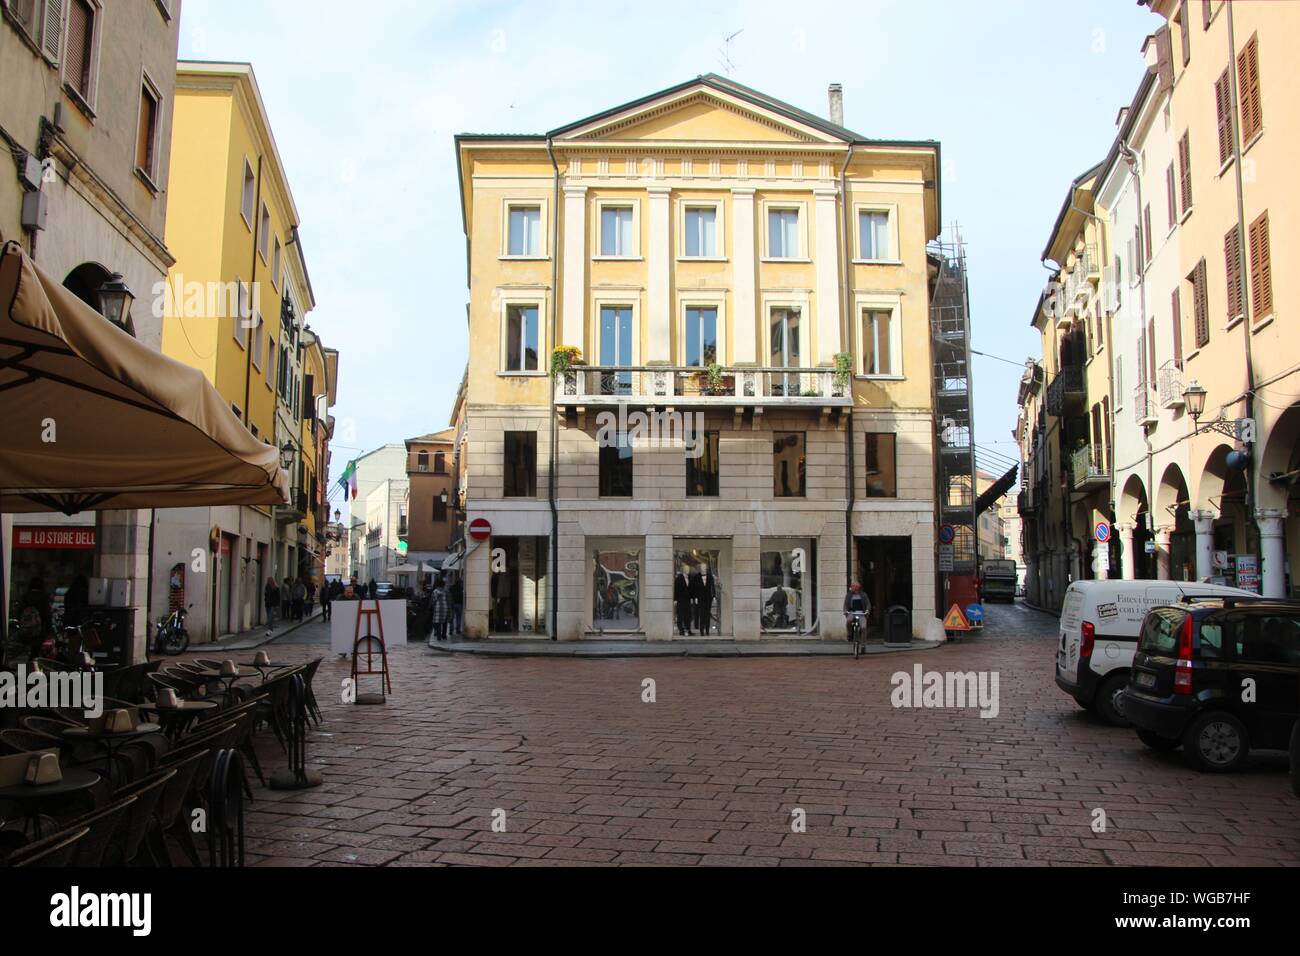 Mantua, Italien: Piazza Marco. Historische Gebäude in der Altstadt von Mantua. In Norditalien, in Südeuropa. Stockfoto